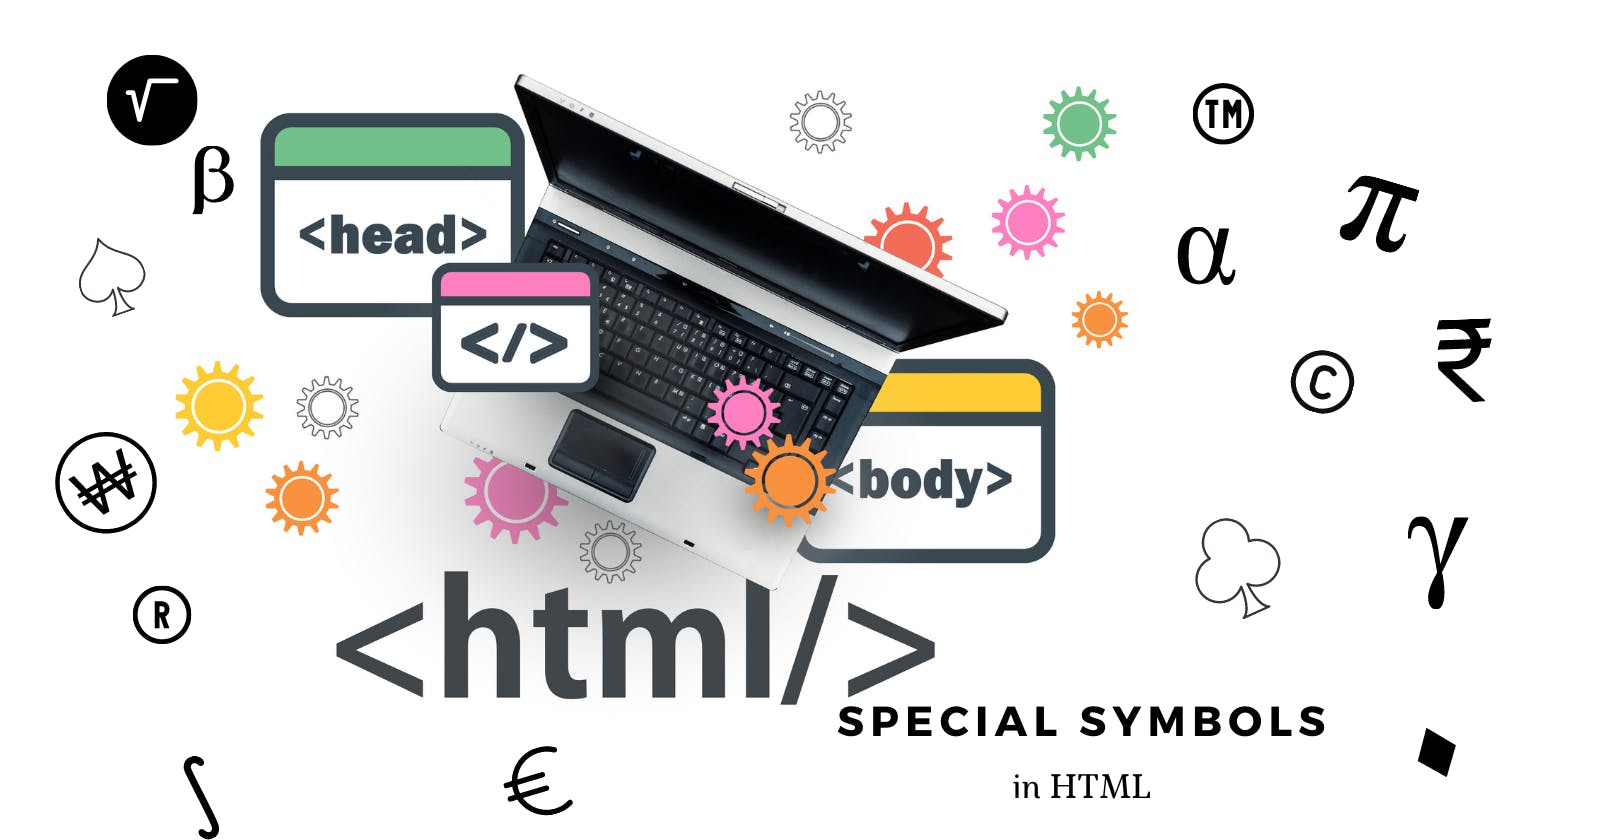 Special symbols in HTML